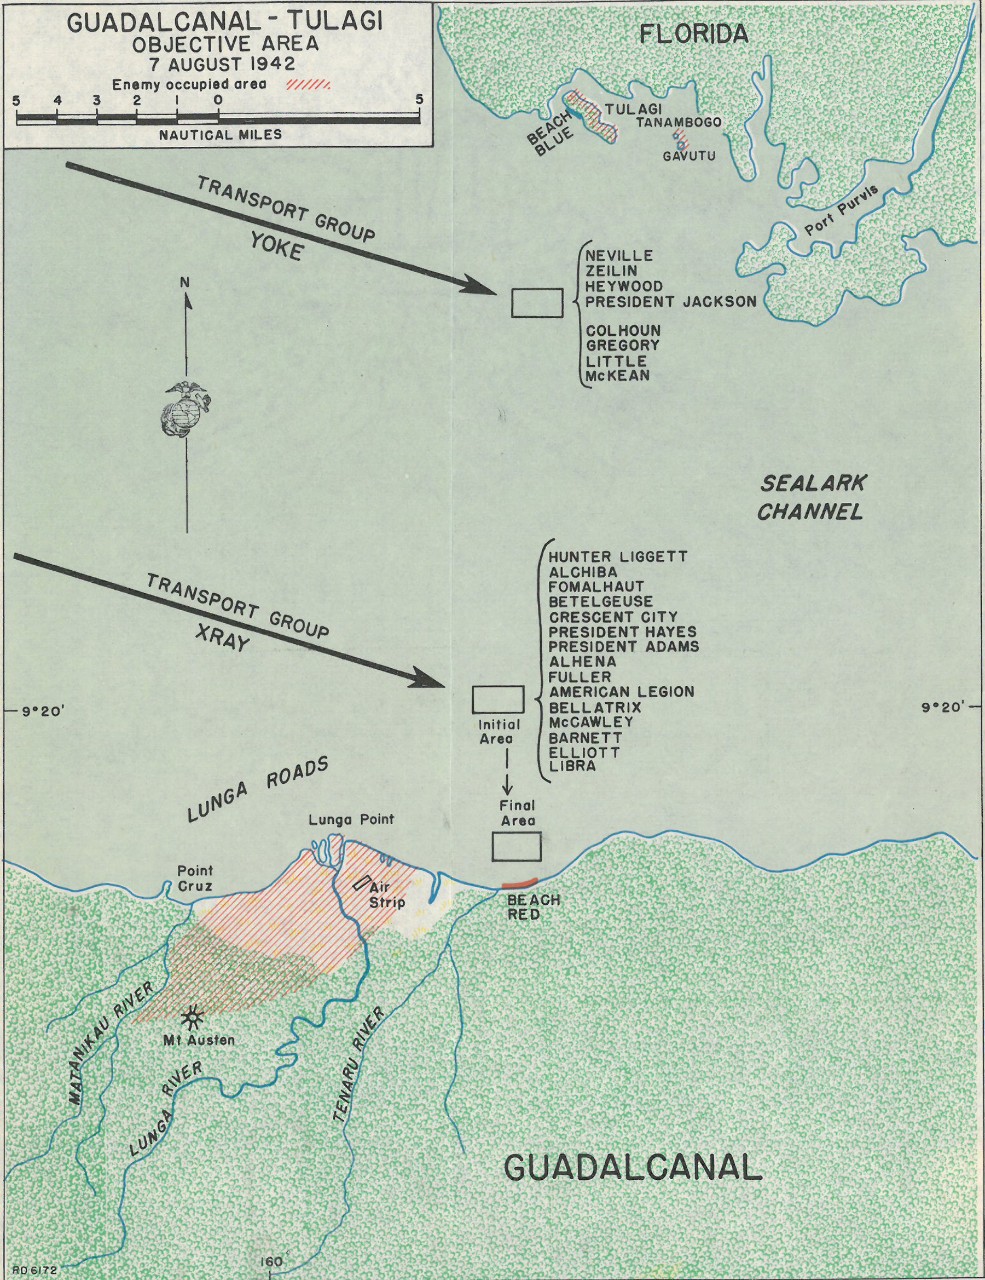 Map 3: Guadalcanal-Tulagi Objective Area